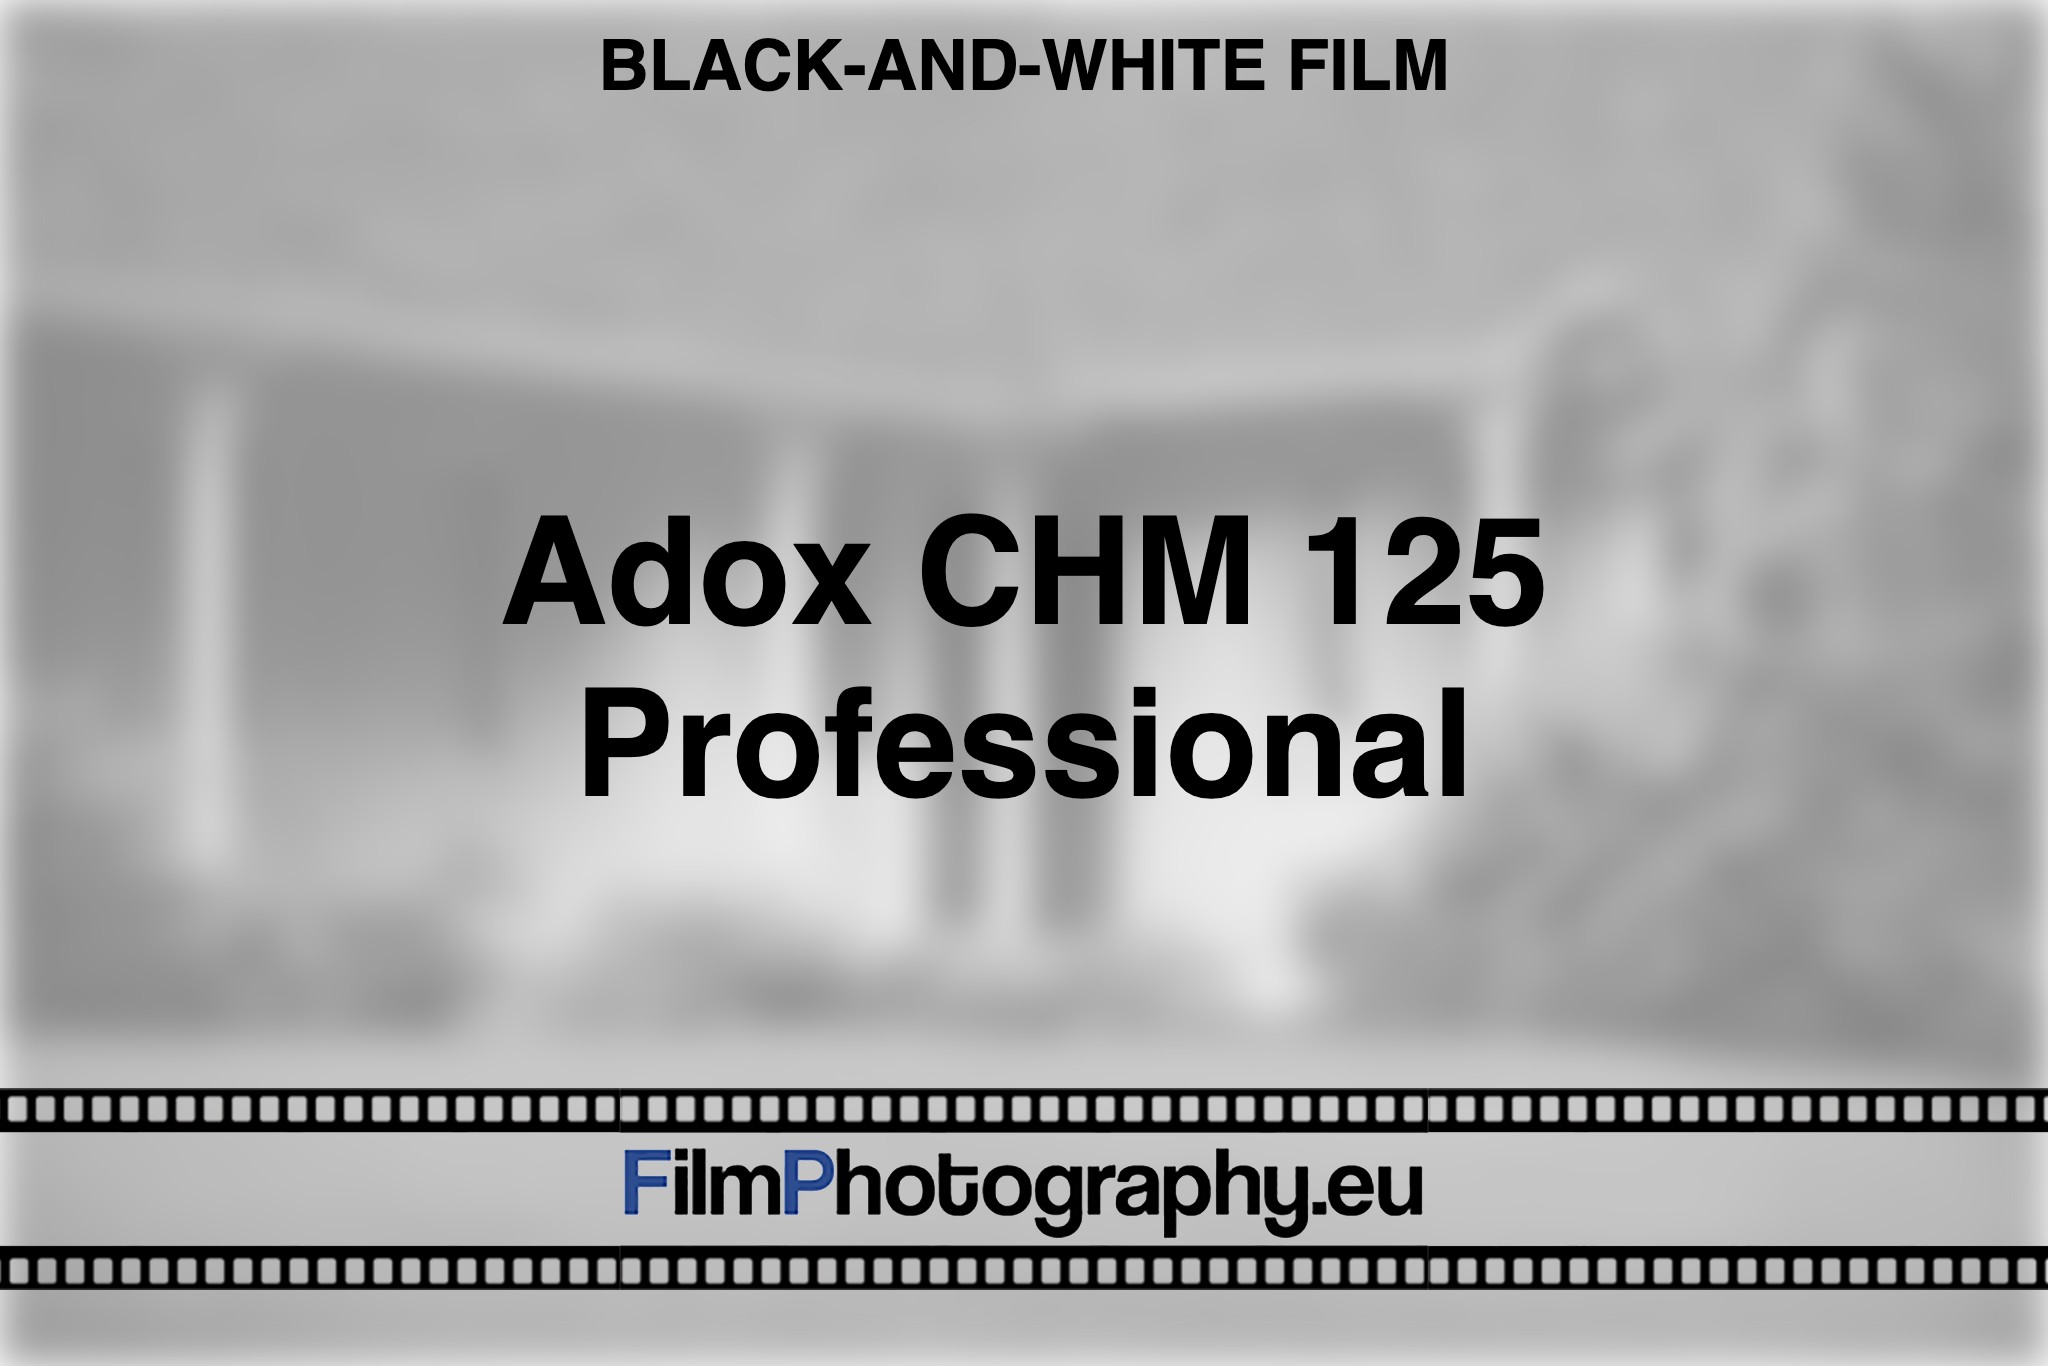 adox-chm-125-professional-black-and-white-film-bnv